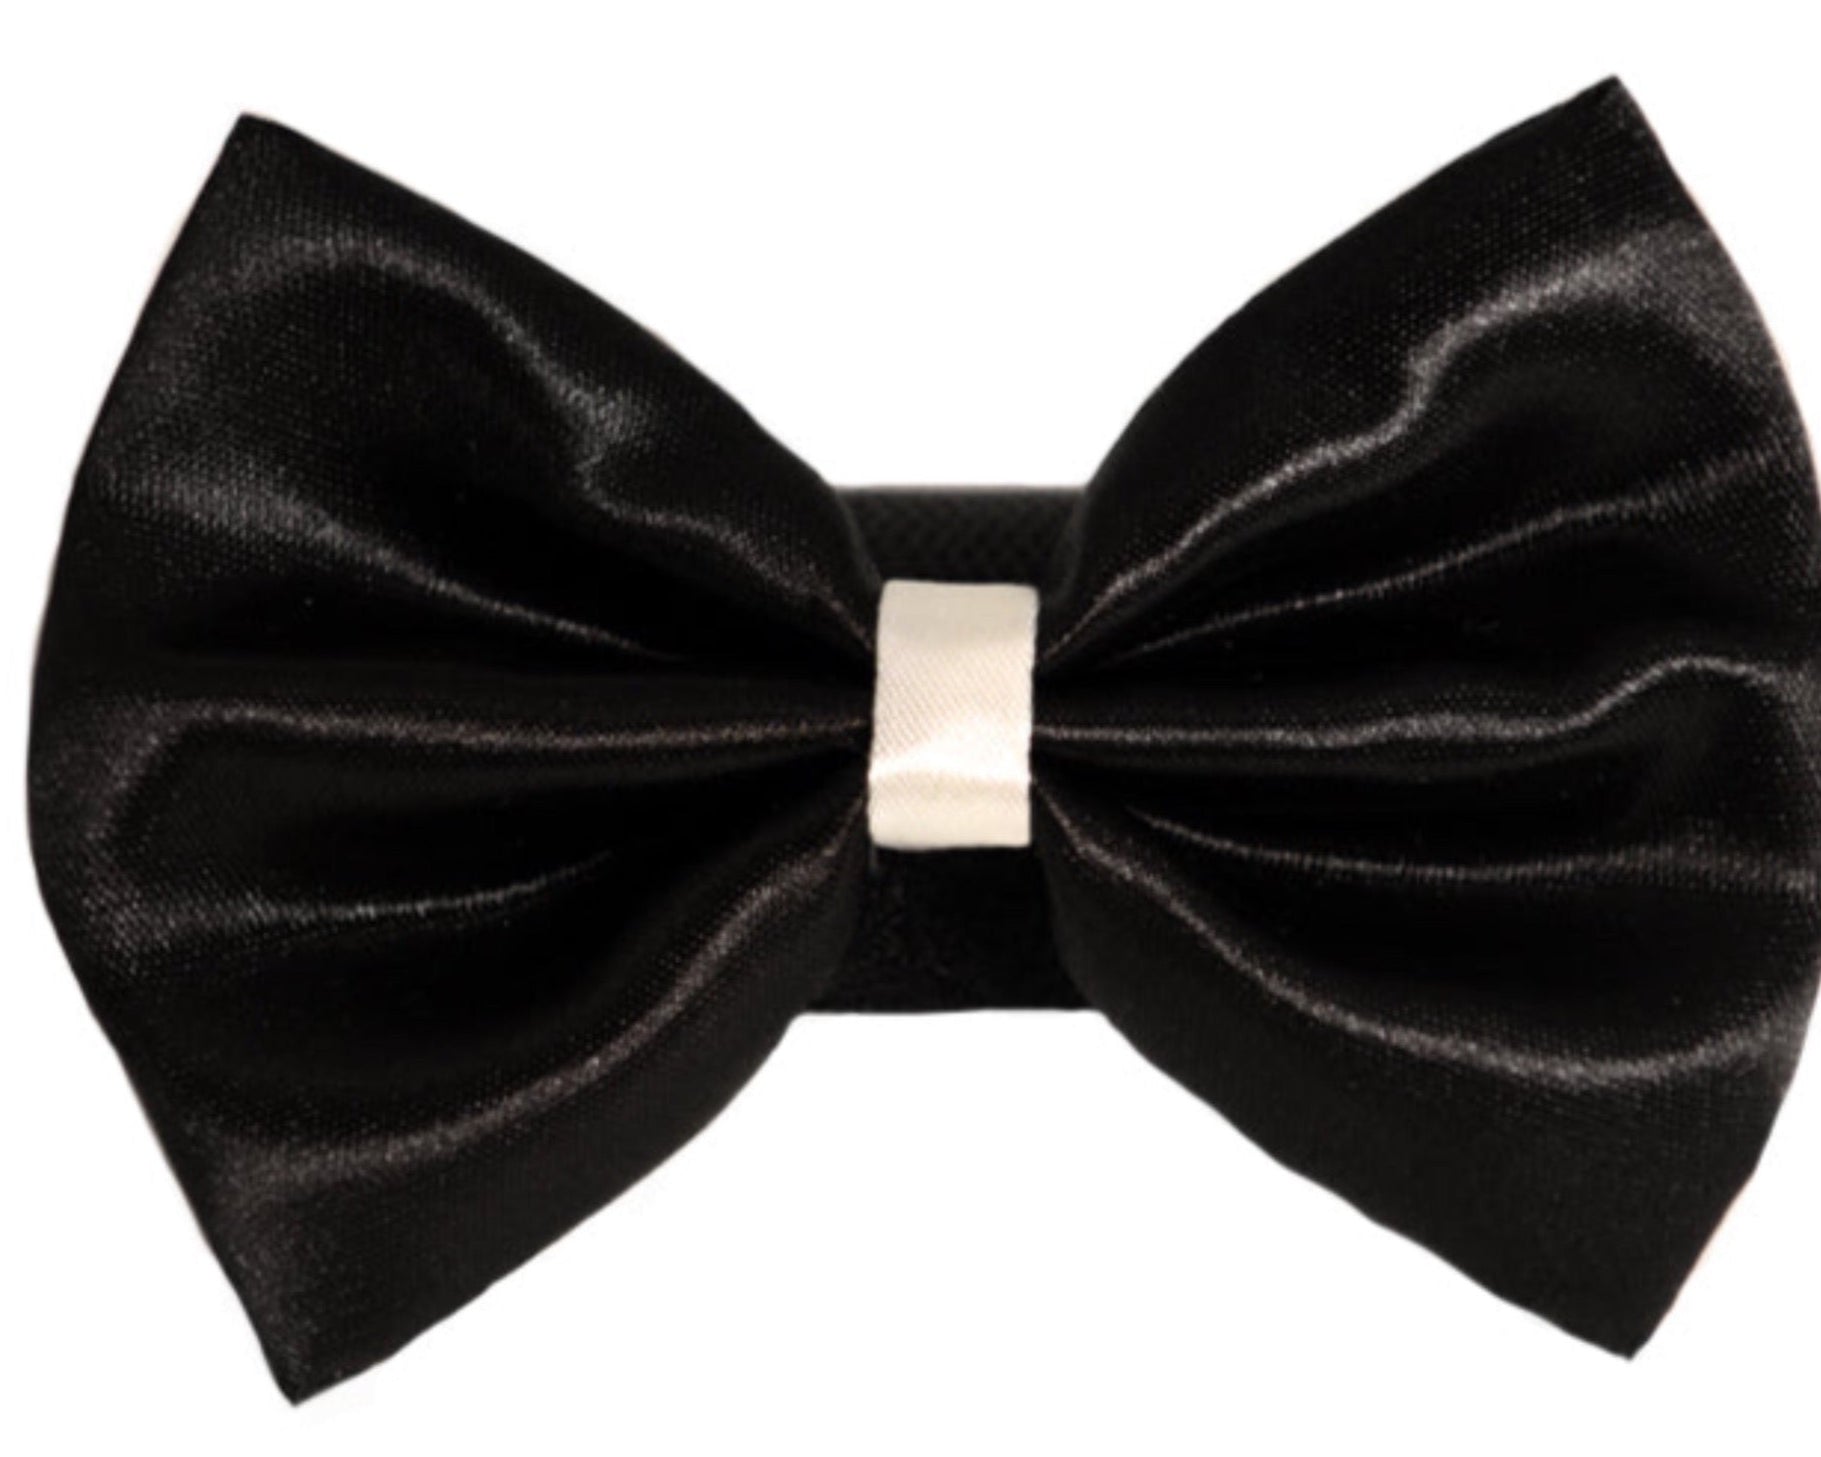 Wedding satin bow with white trim on a velcro safety fastener black